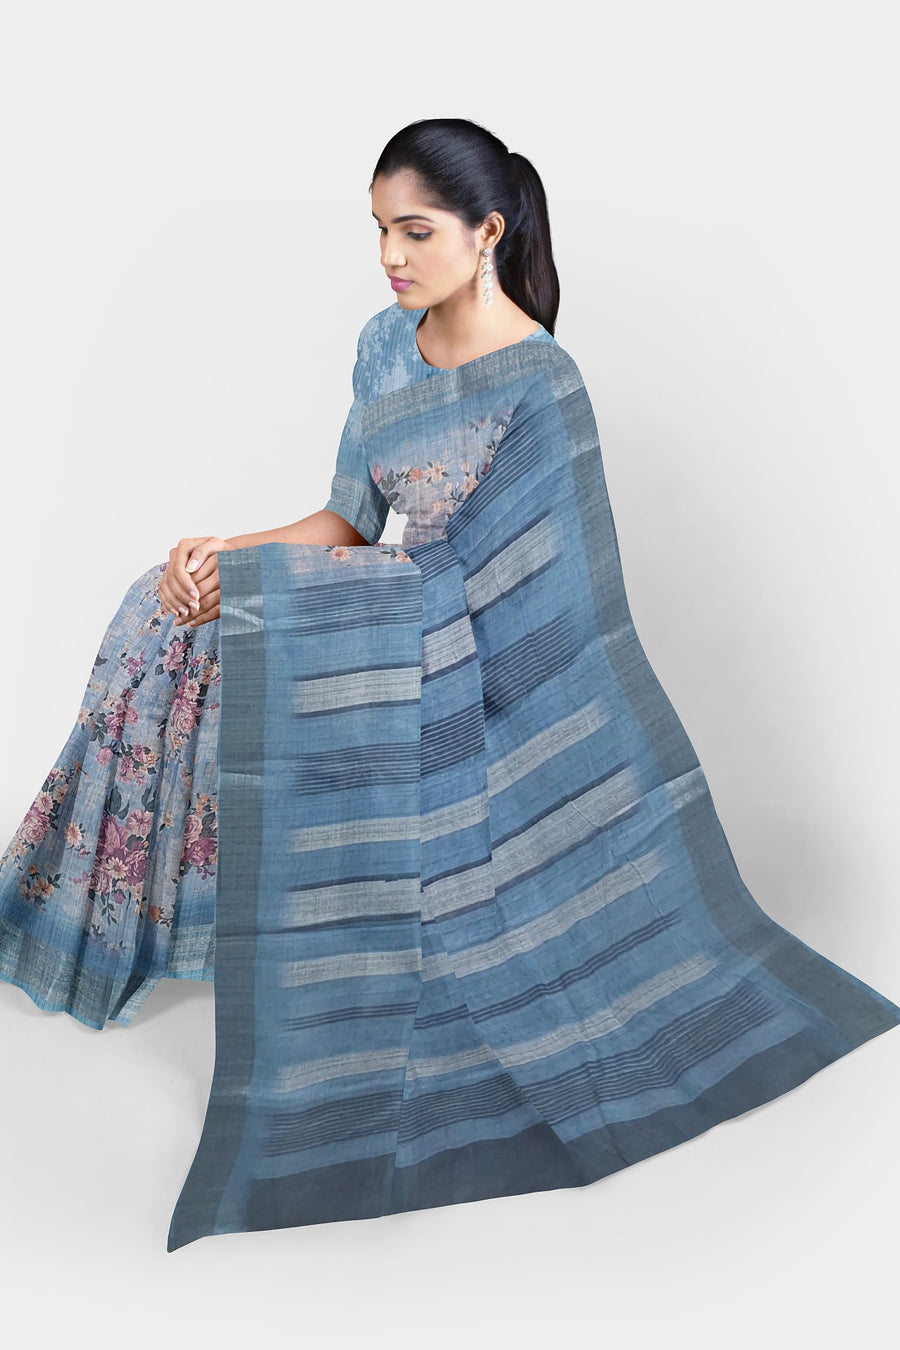 Pure Linen Digital Print Saree by Sarandhri Sanyogita Floral Skies Symphony x One Blouse